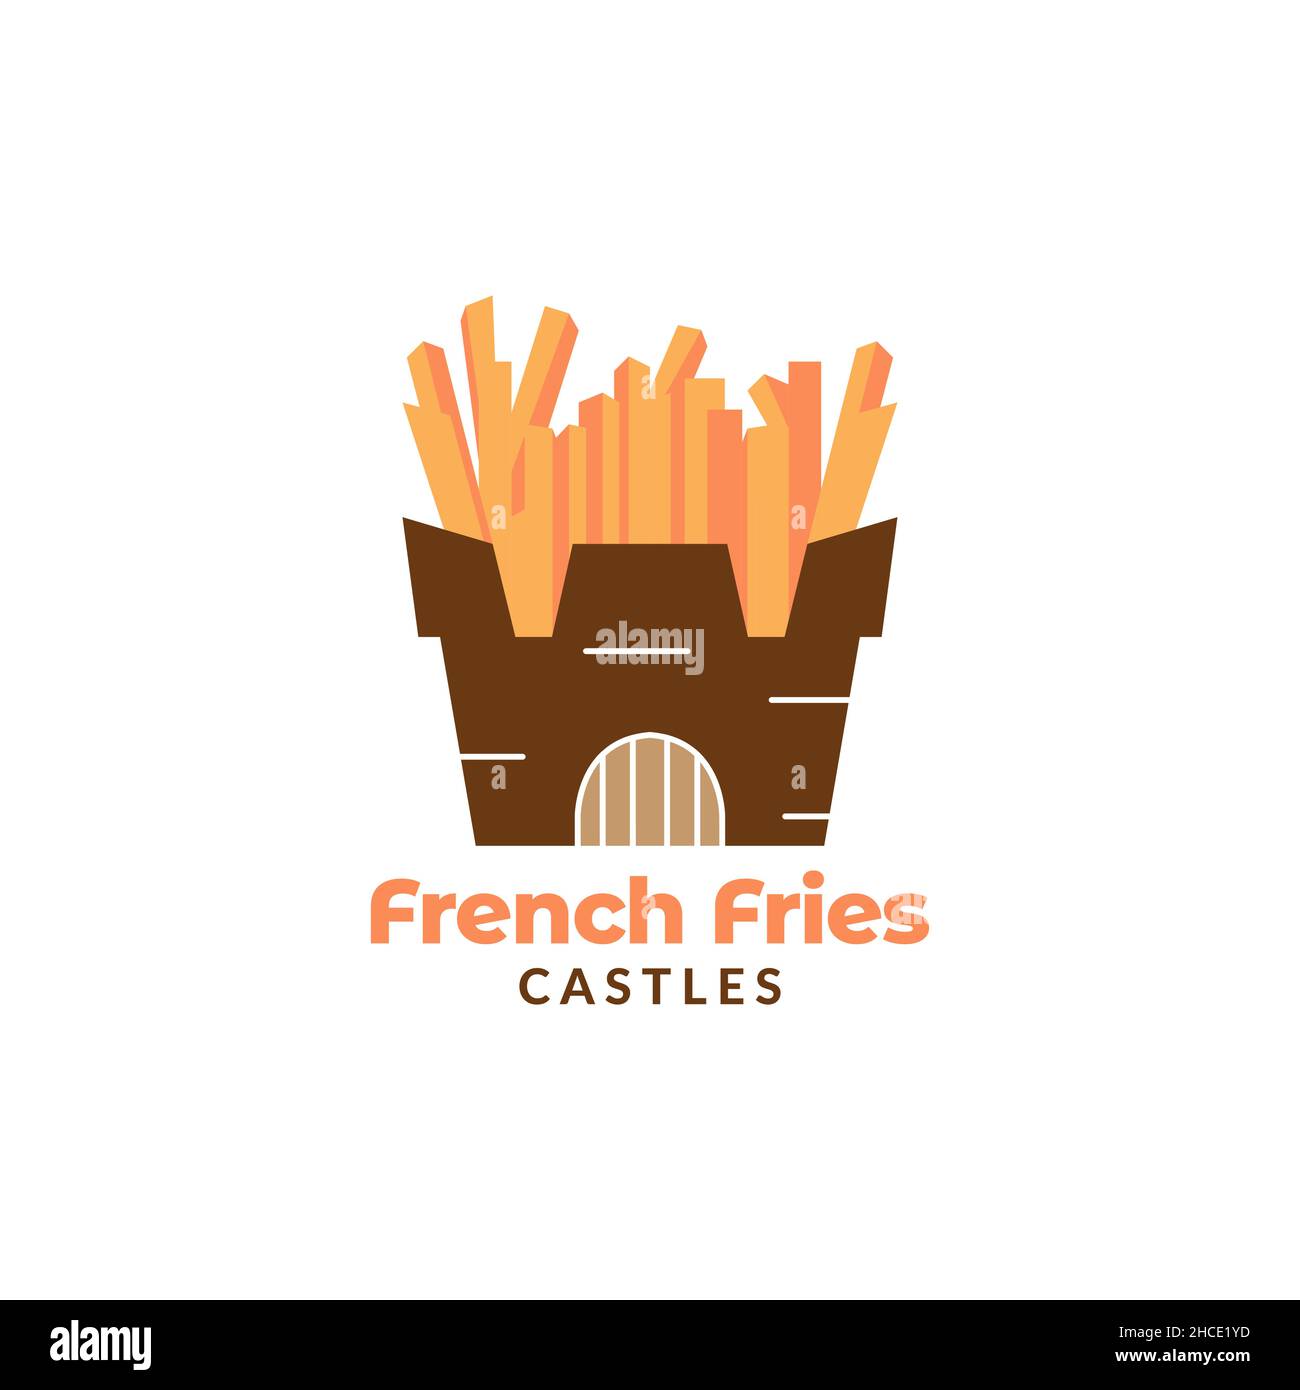 french fries castle logo design vector graphic symbol icon sign illustration creative idea Stock Vector